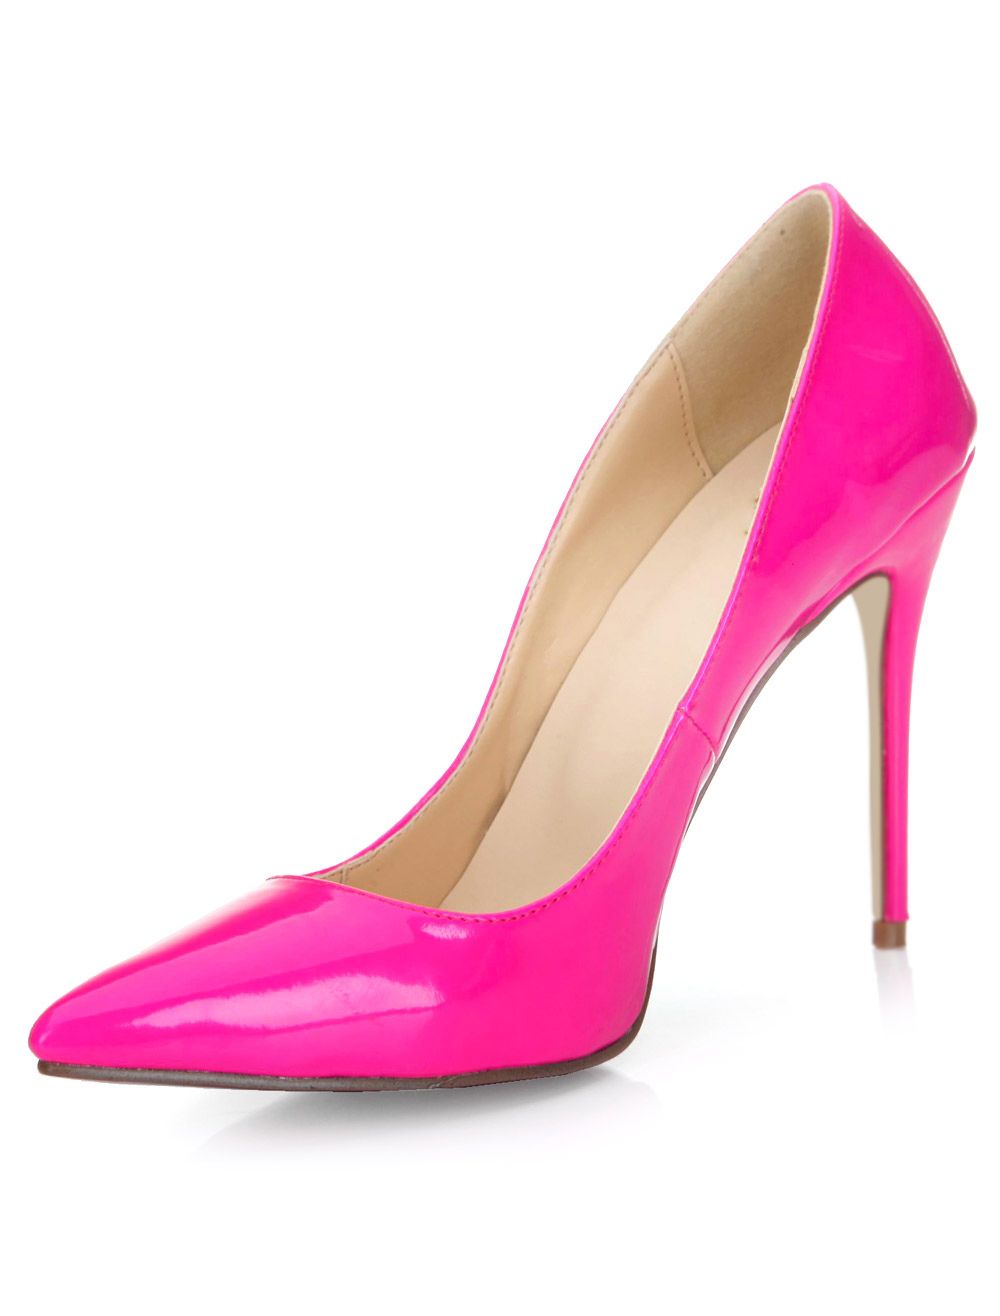 Black High Heels Dress Shoes Pointed Toe Patent Leather Stilettos Pumps #23700468605 | Milanoo